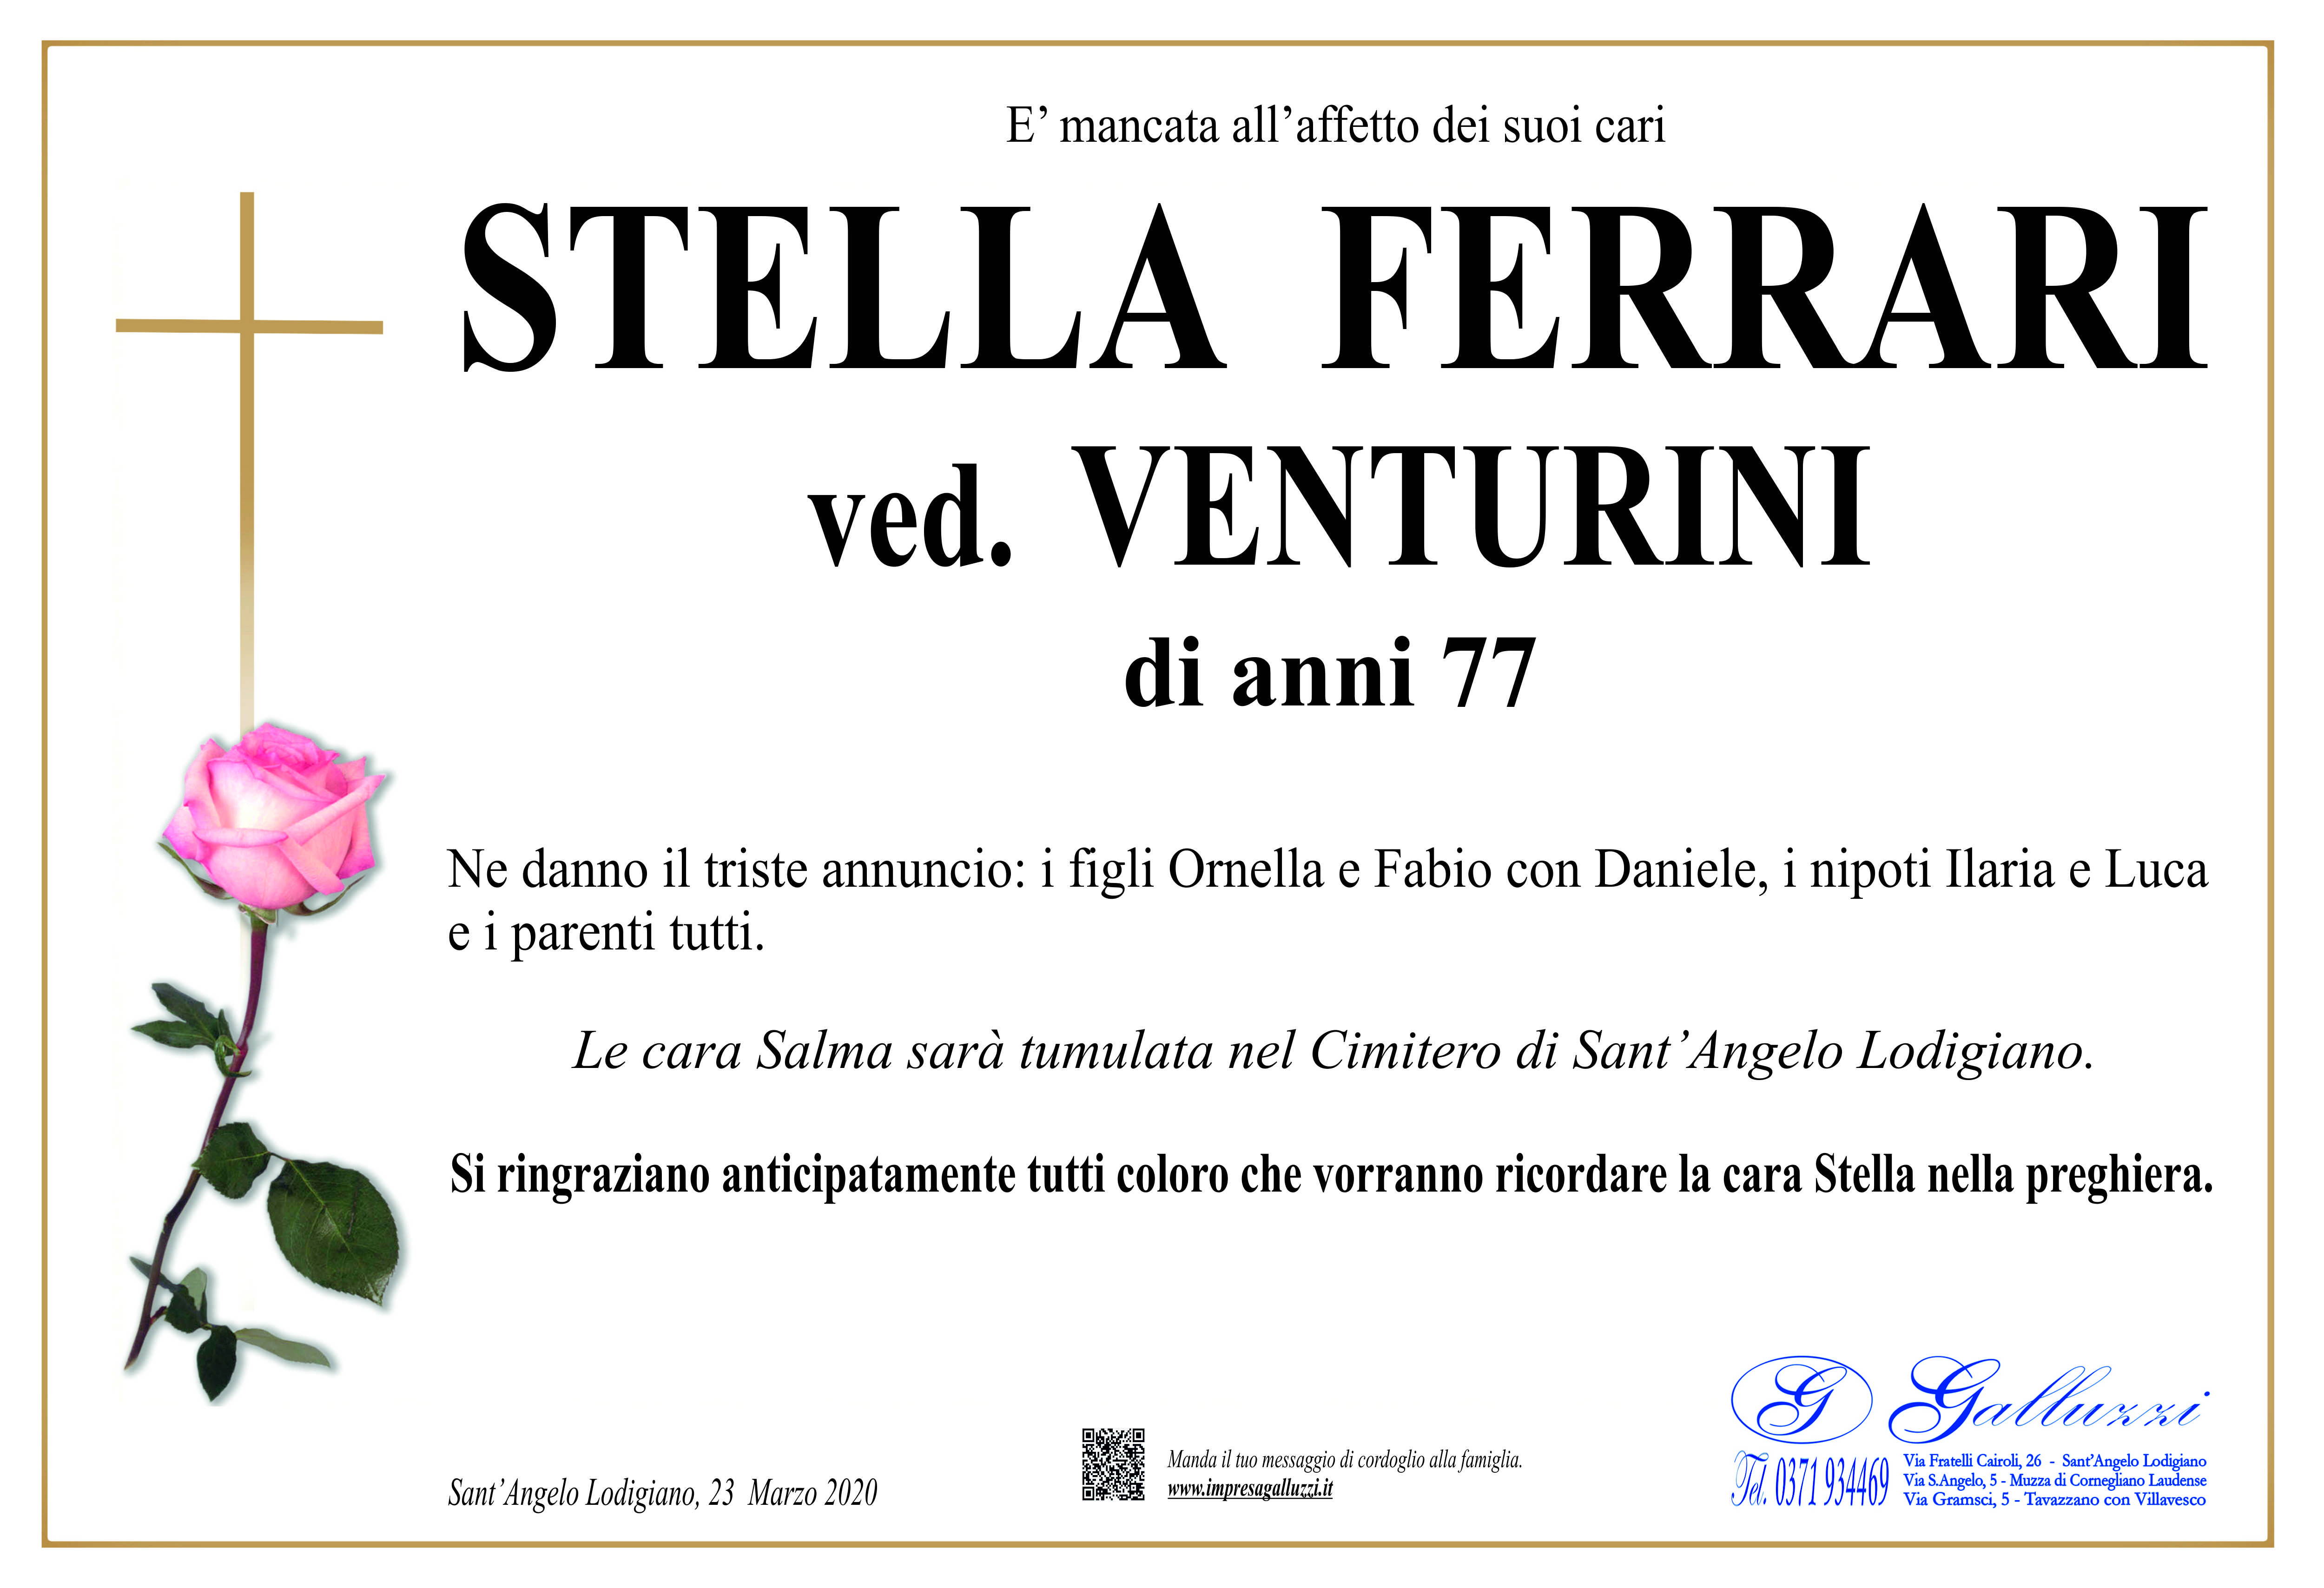 Stella Ferrari